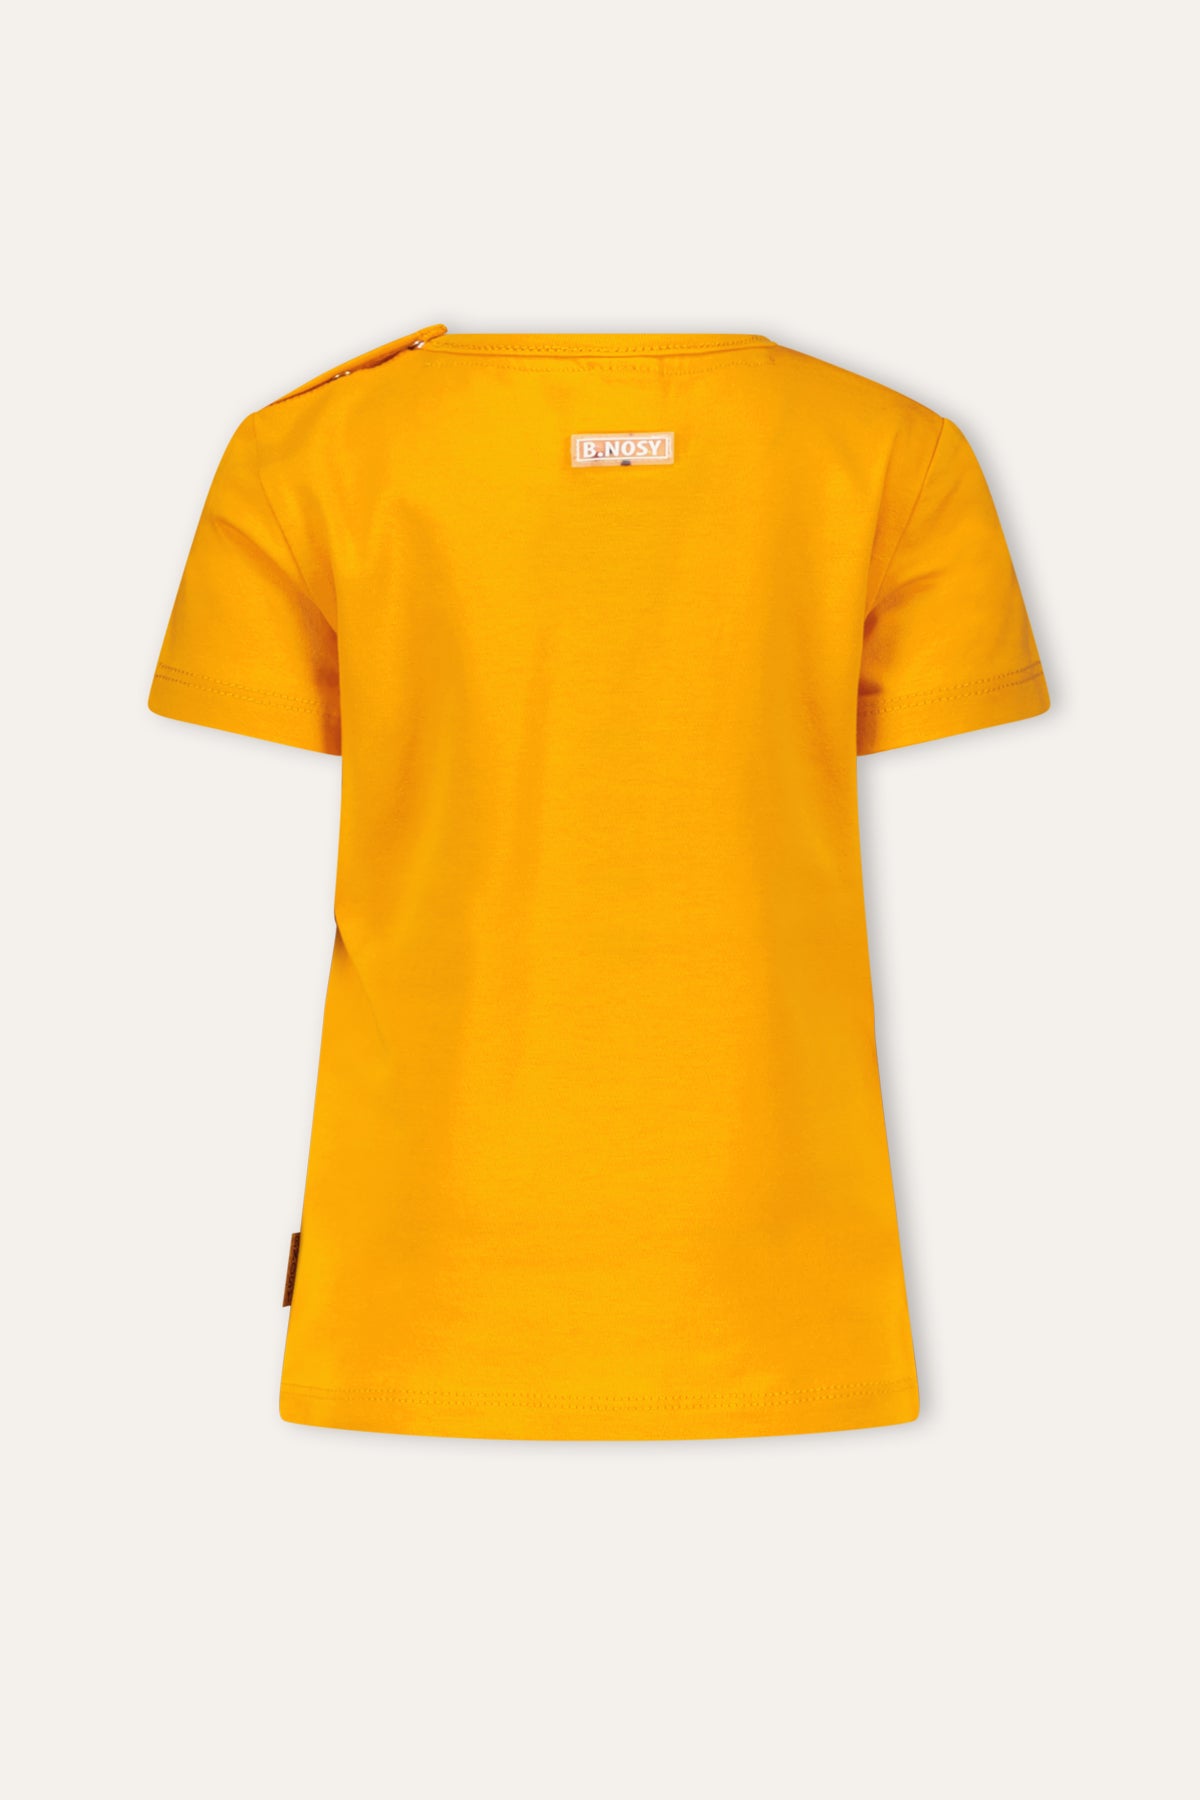 BOWI t-shirt geel